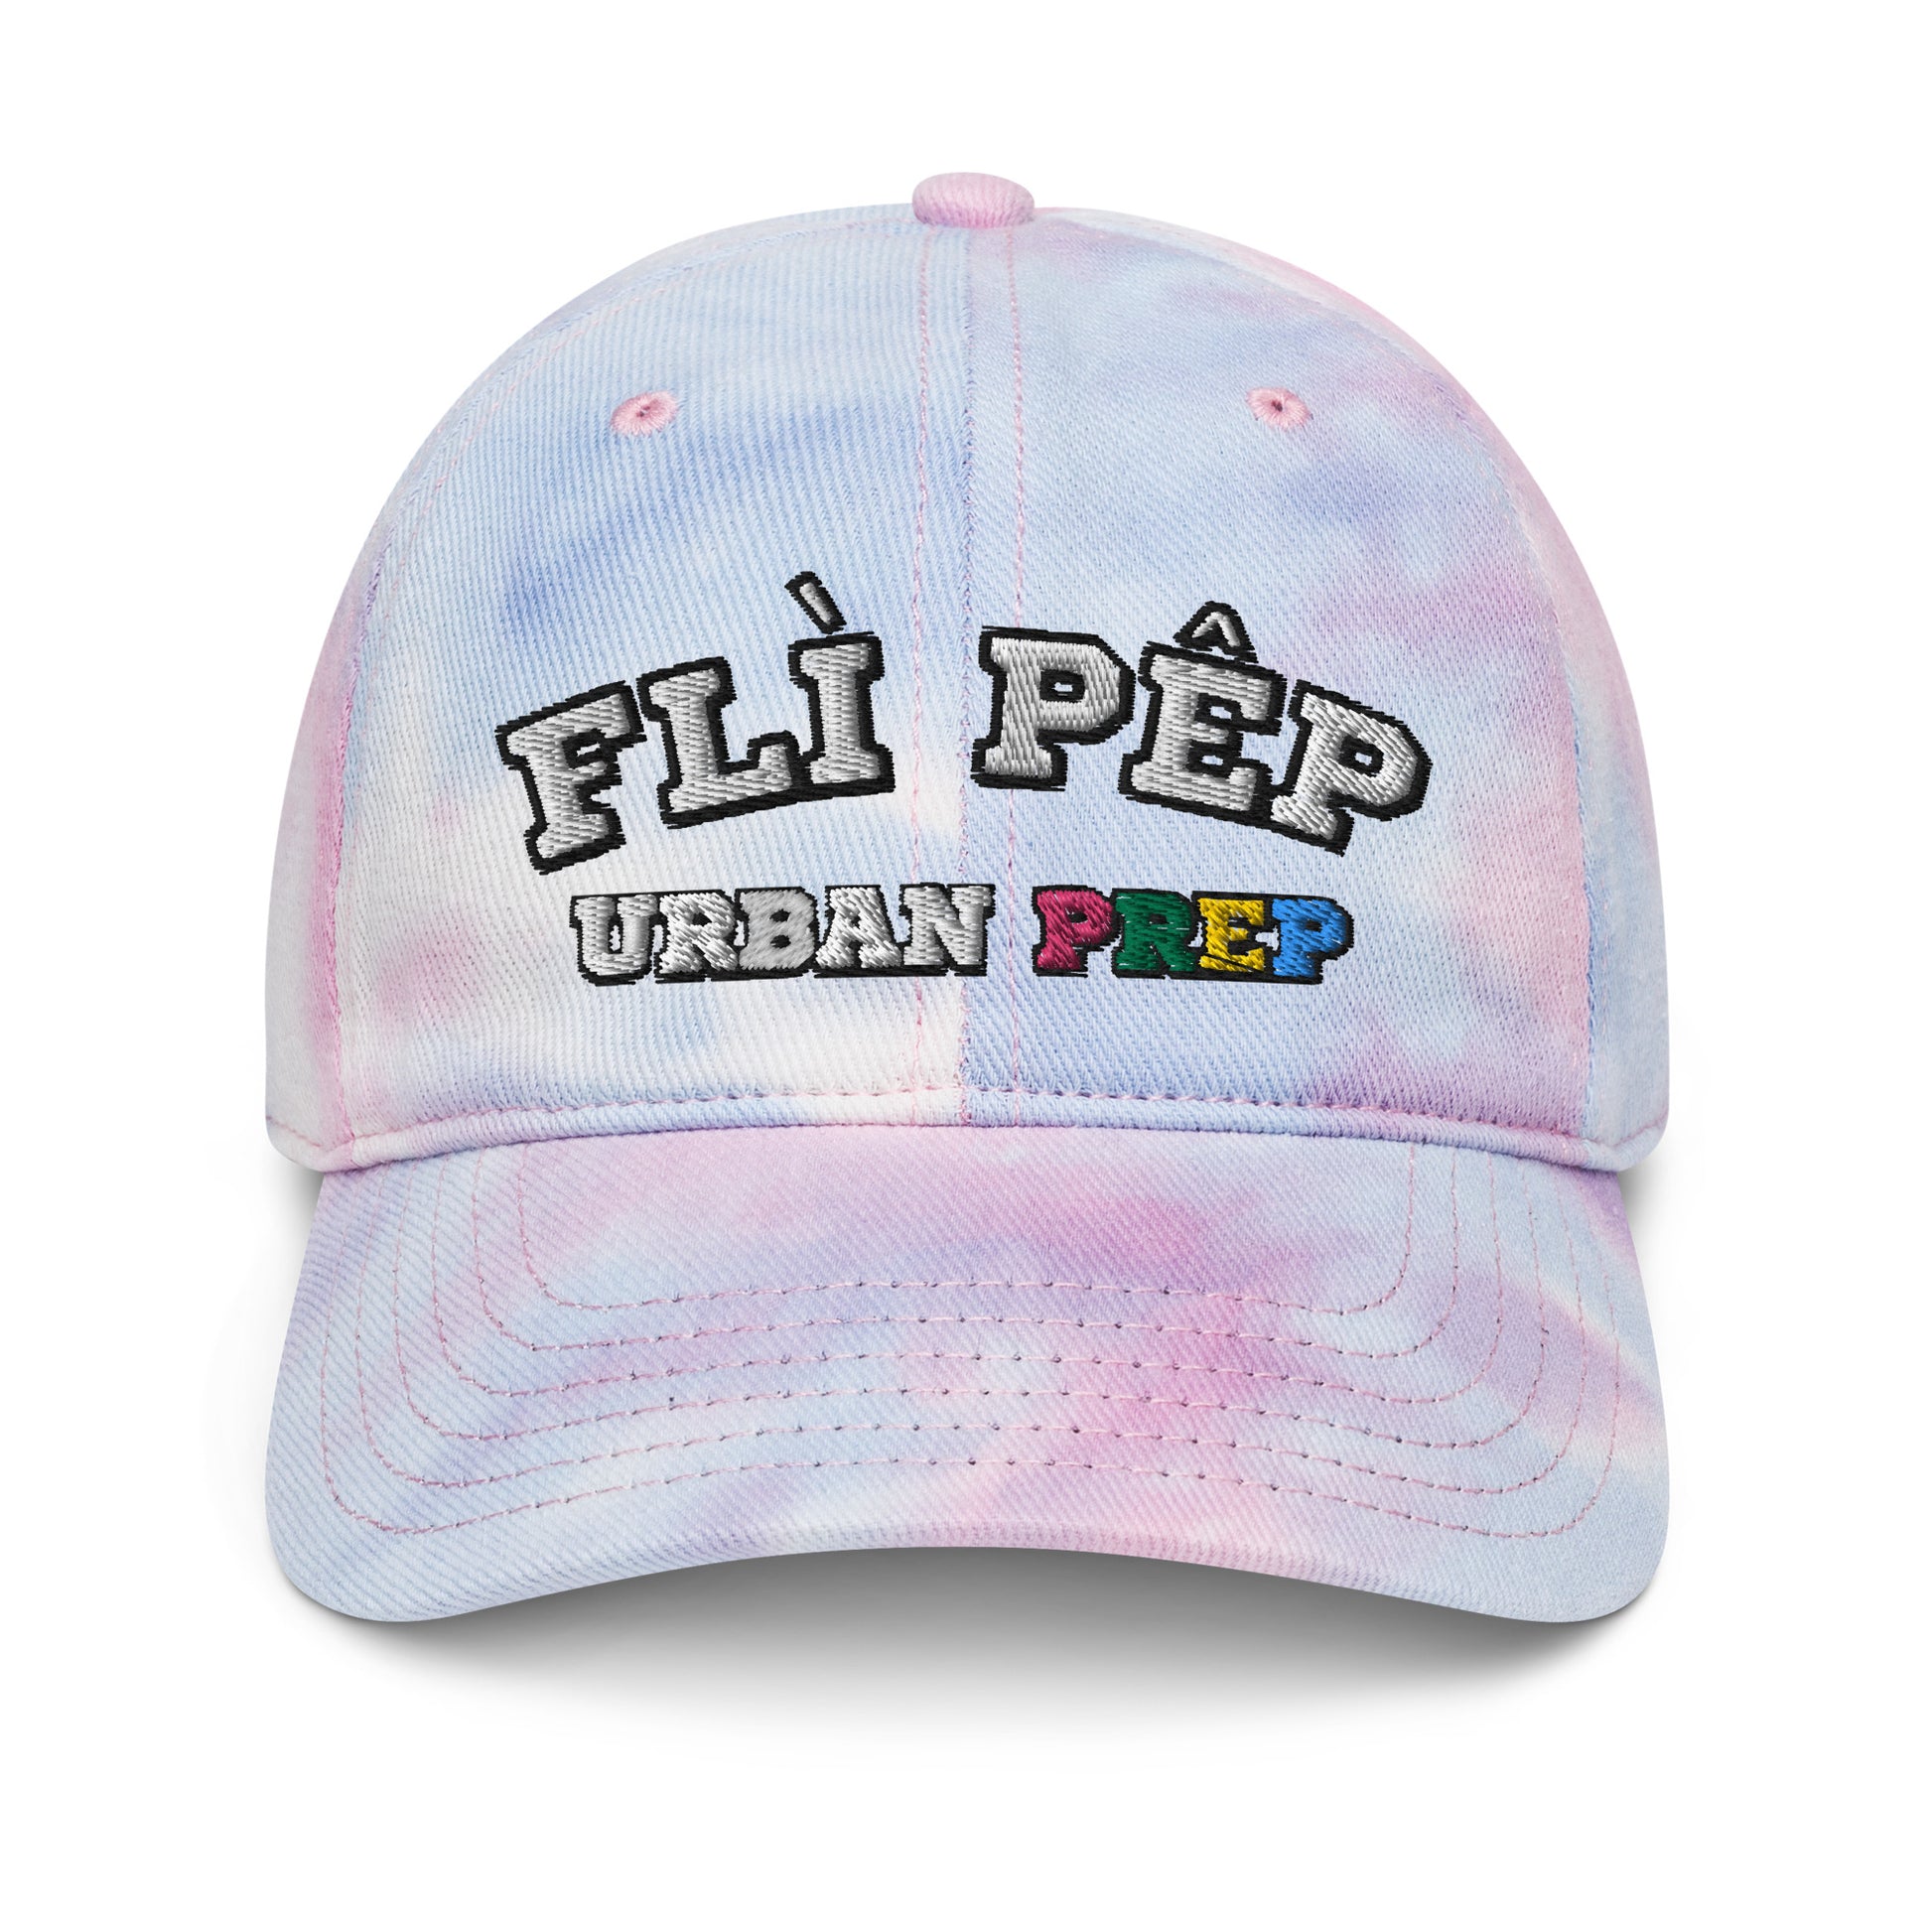 Urban Prep Tie Dye Hat - FLÌ PÊP™